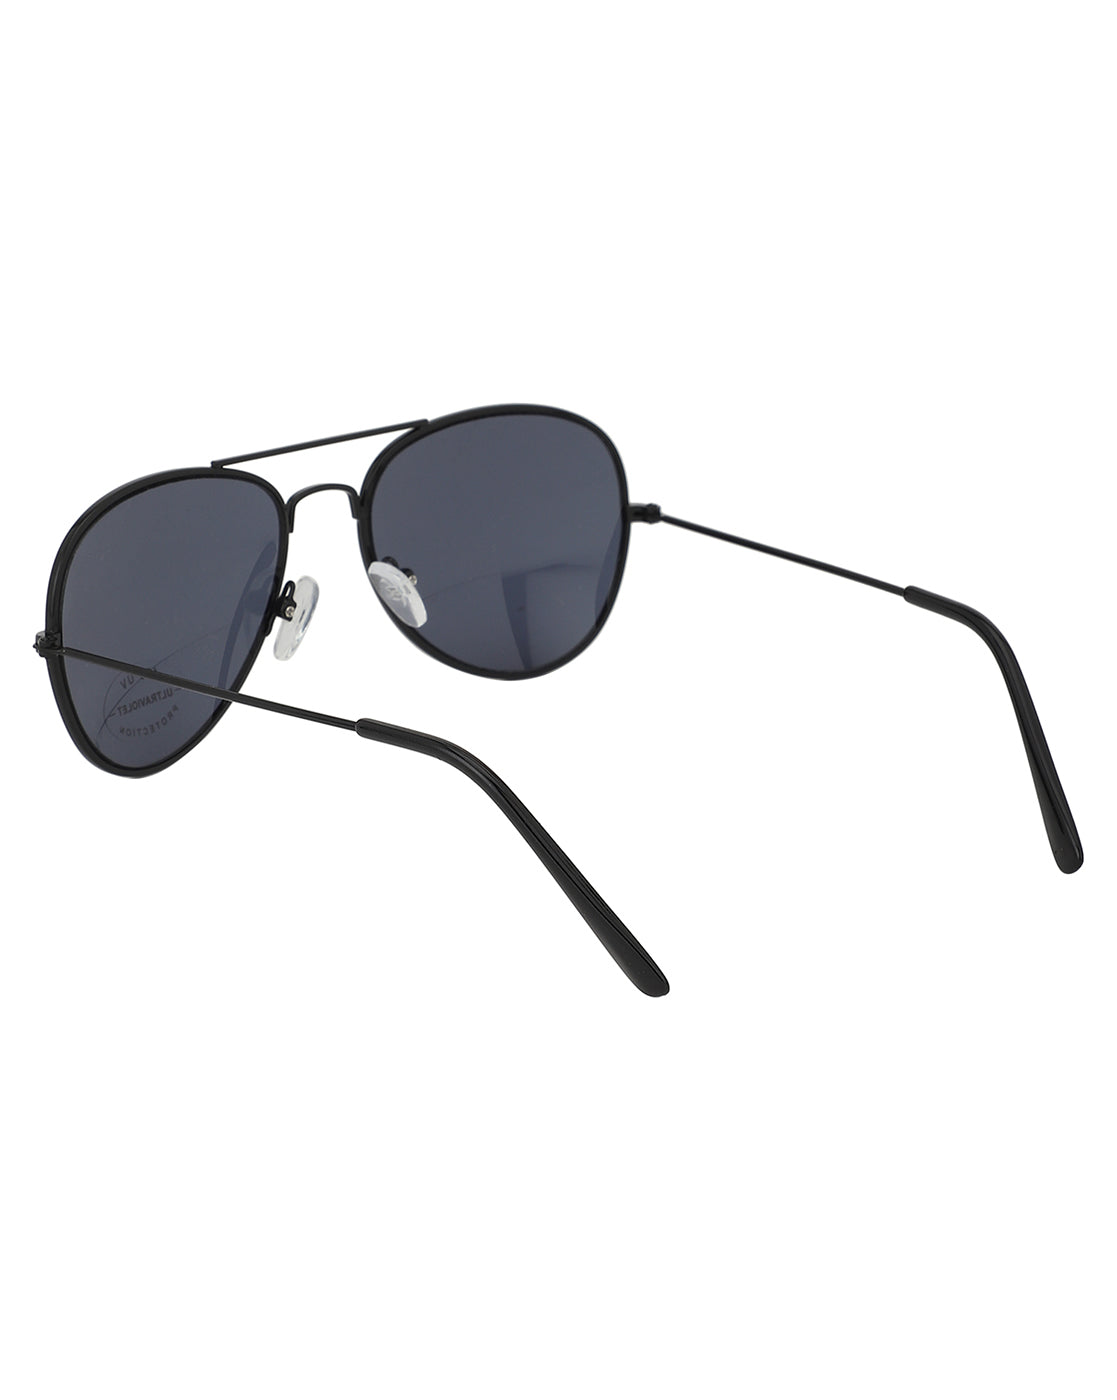 Carlton London Black Lens &amp; Black Aviator Sunglasses With Uv Protected Lens For Boy